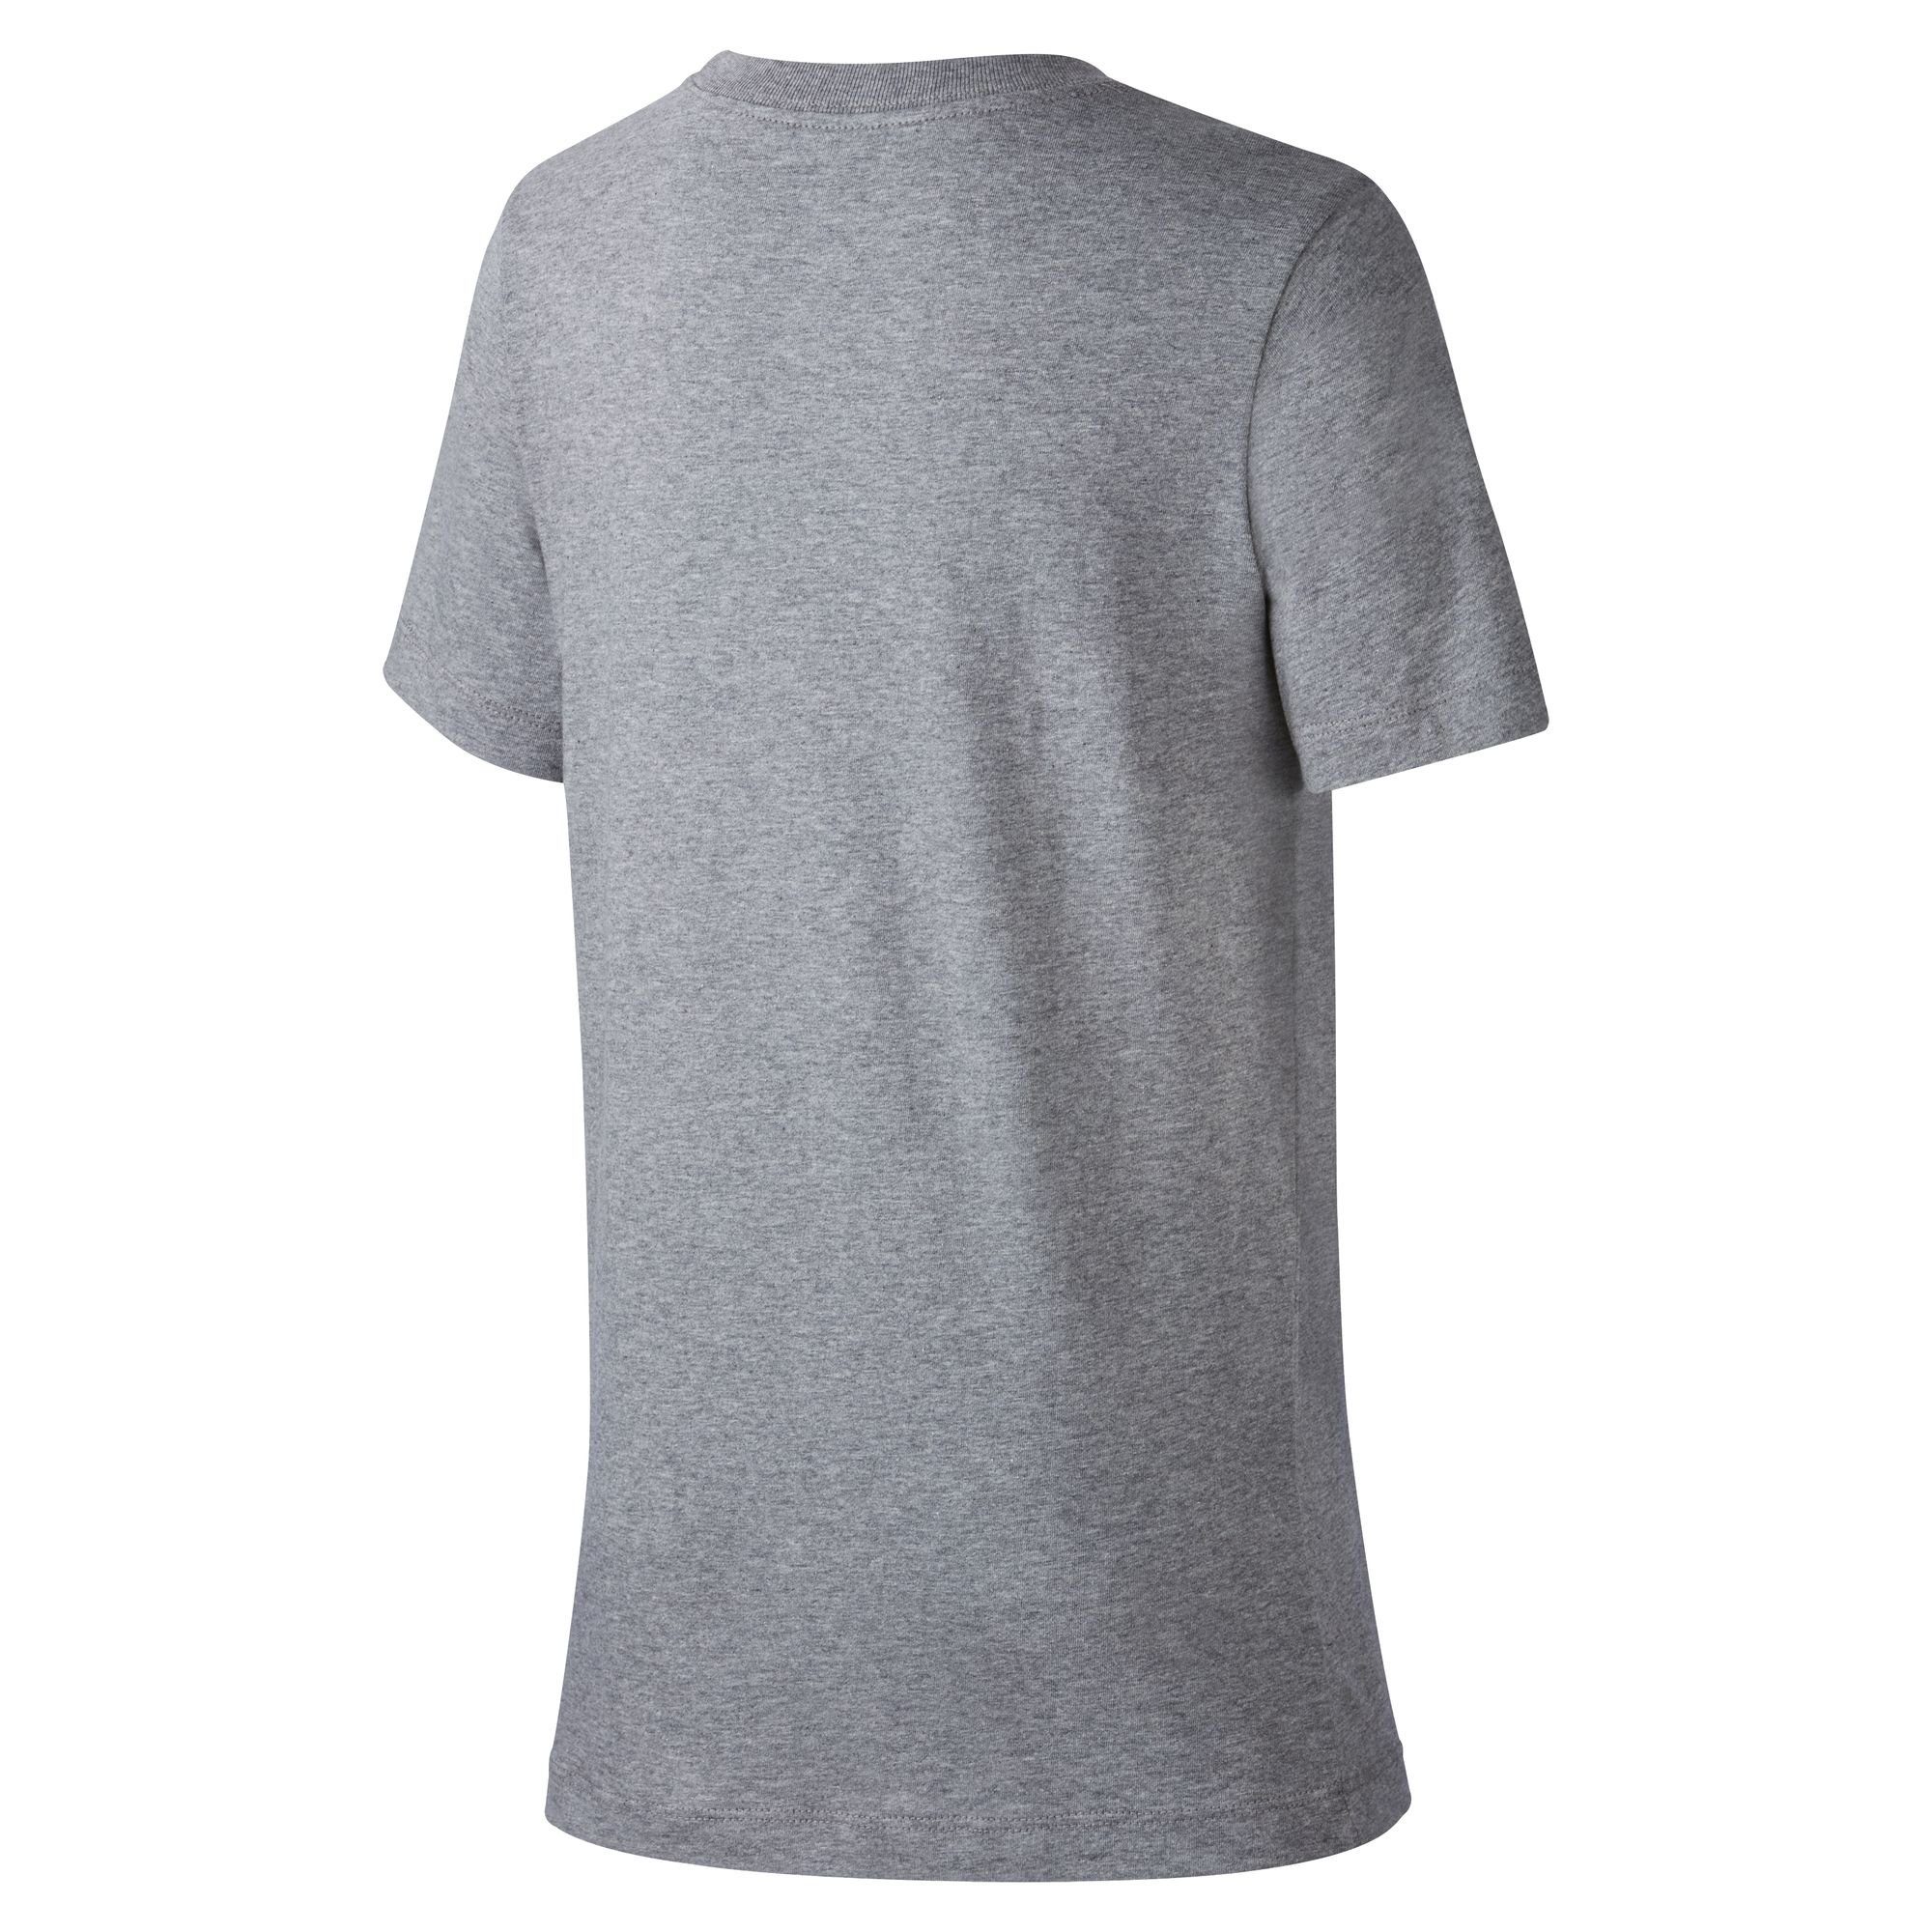 Nike Sportswear KIDS' grau-meliert BIG T-SHIRT T-Shirt COTTON